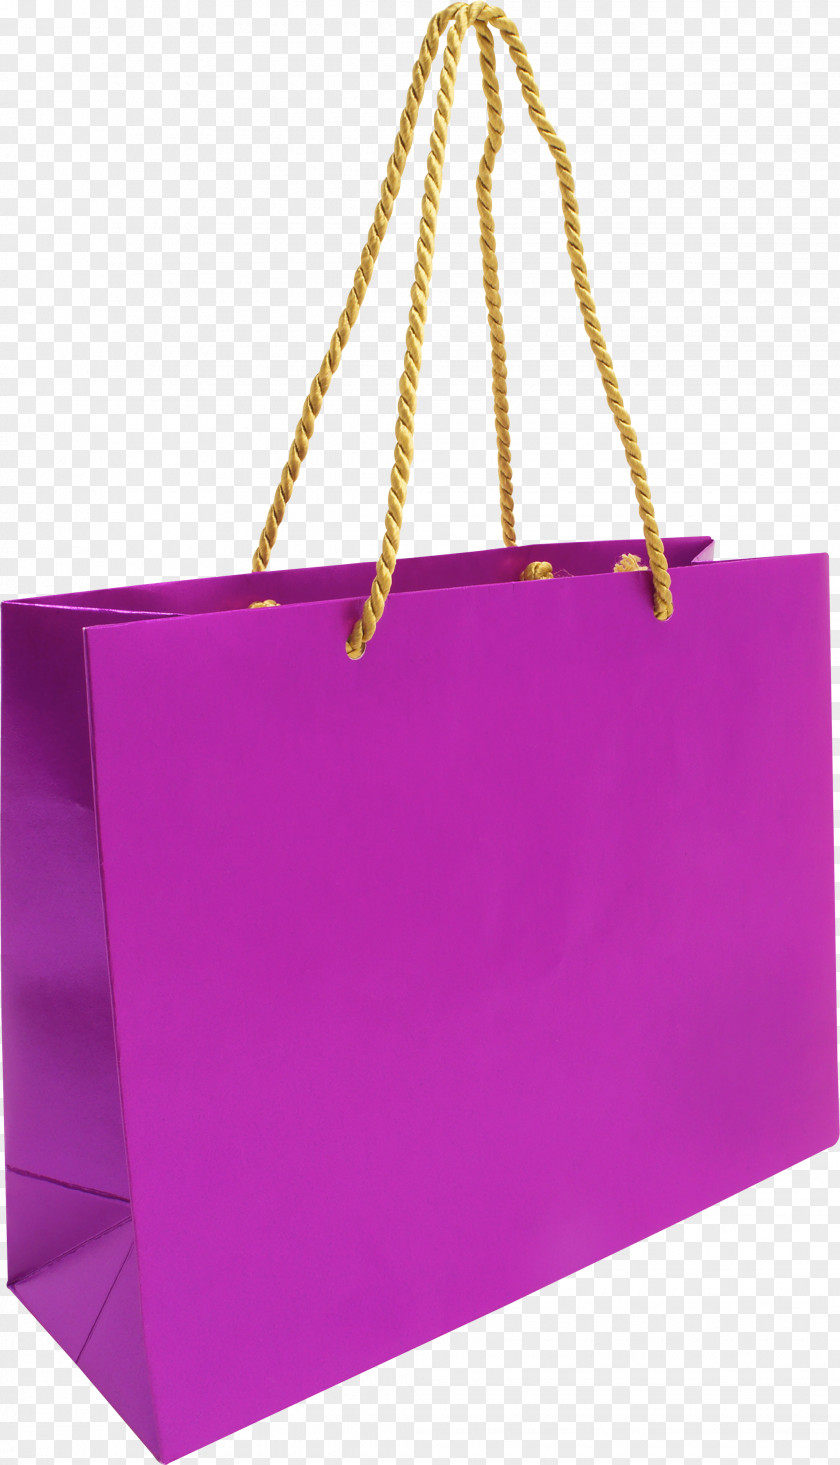 Bags Shopping & Trolleys Clip Art PNG